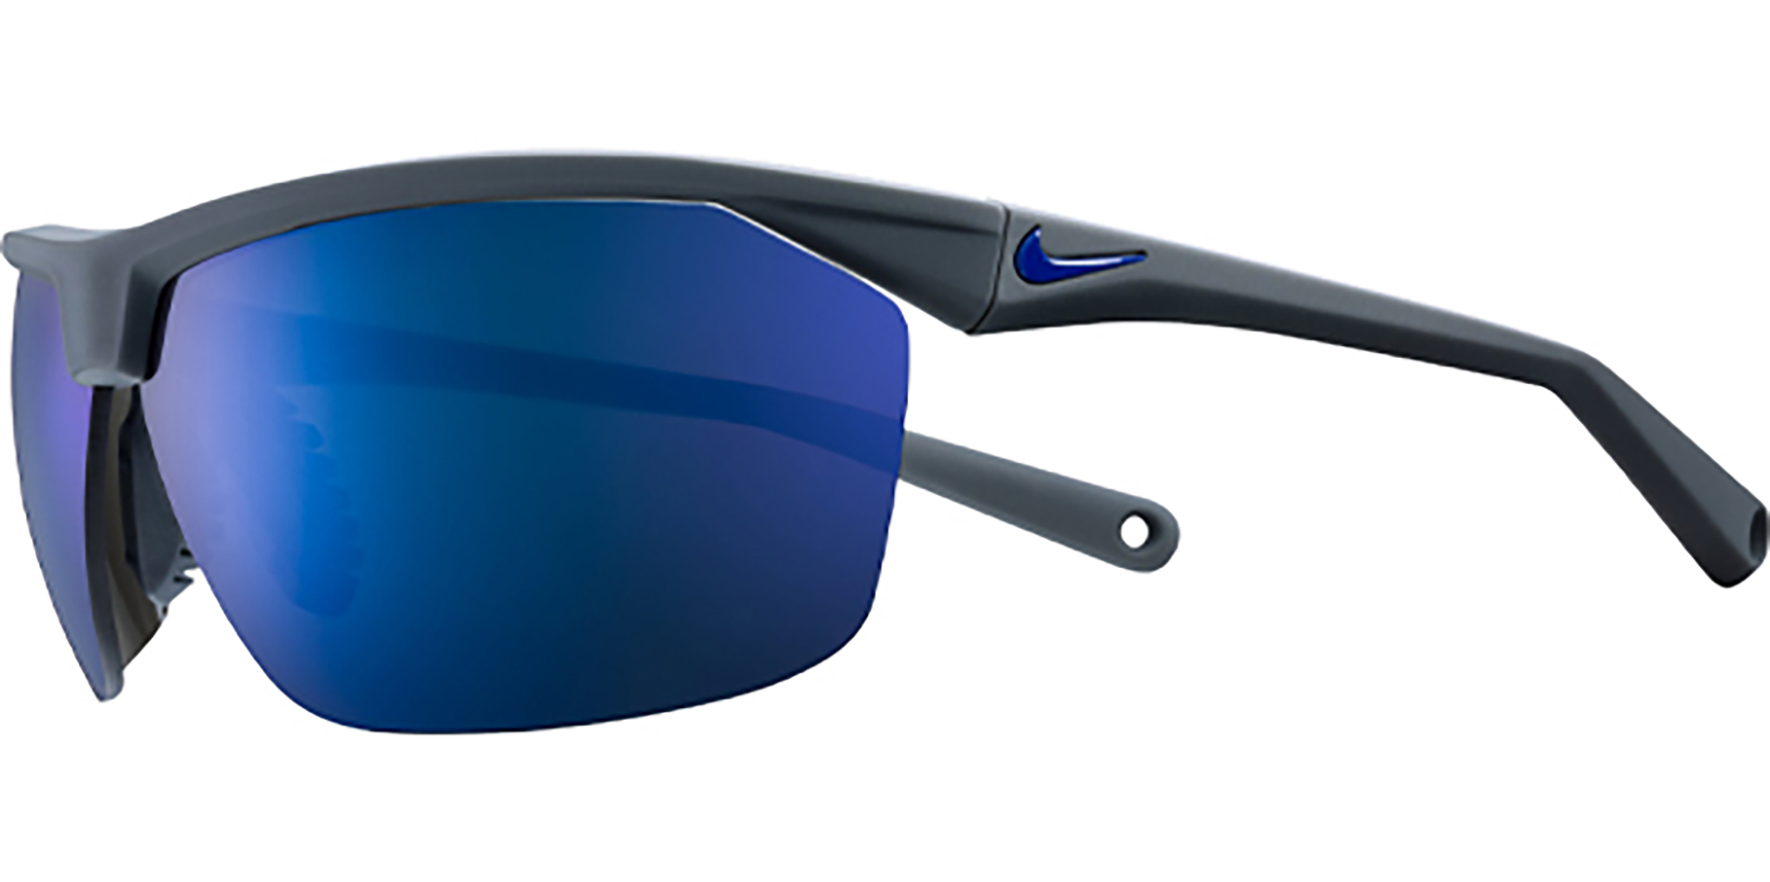 Nike Sunglasses (various styles): Tailwind, Aero Drift, Skylon & More $35 + Free Shipping